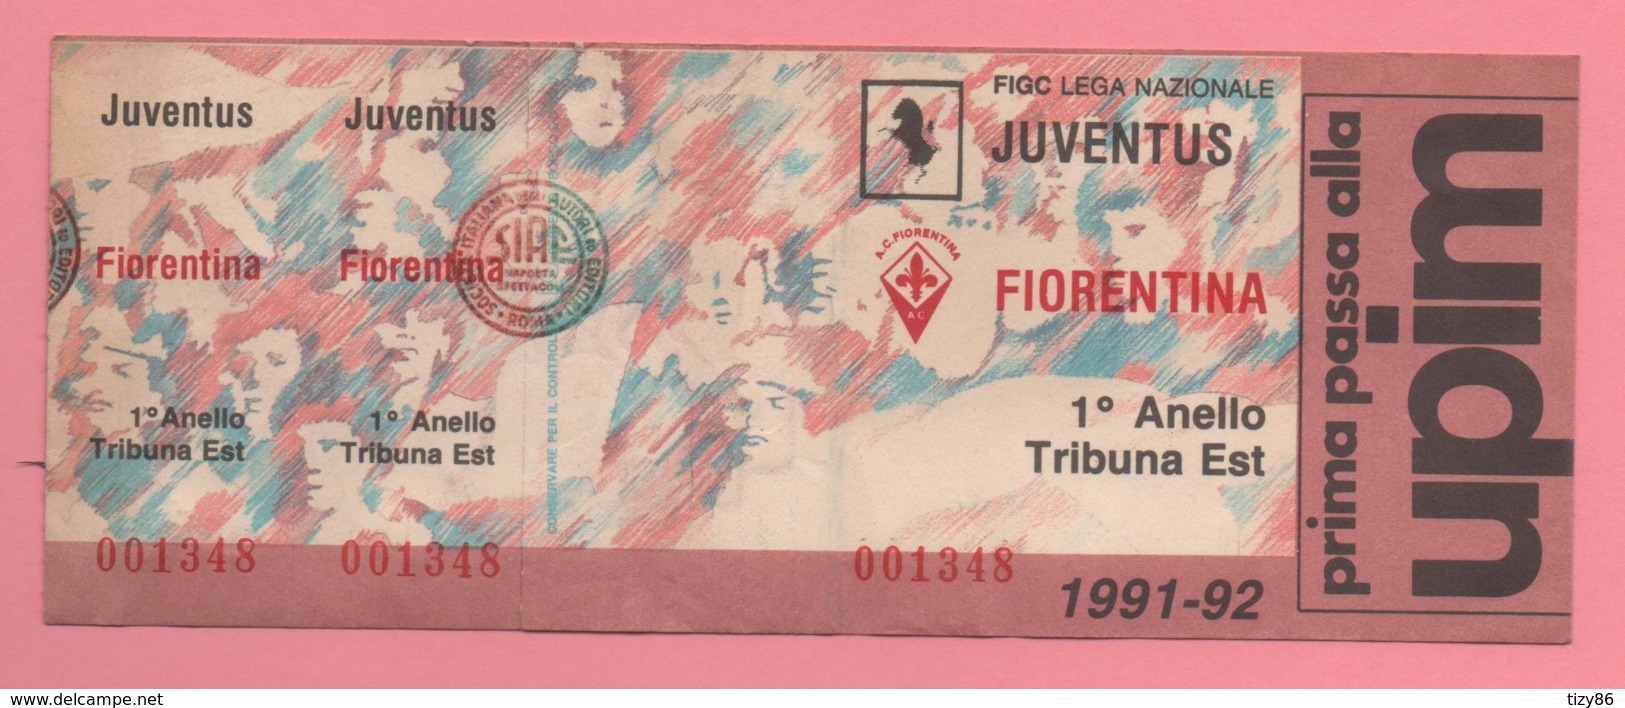 Biglietto D'ingresso Stadio Juventus Fiorentina 1991-92 - Tickets D'entrée